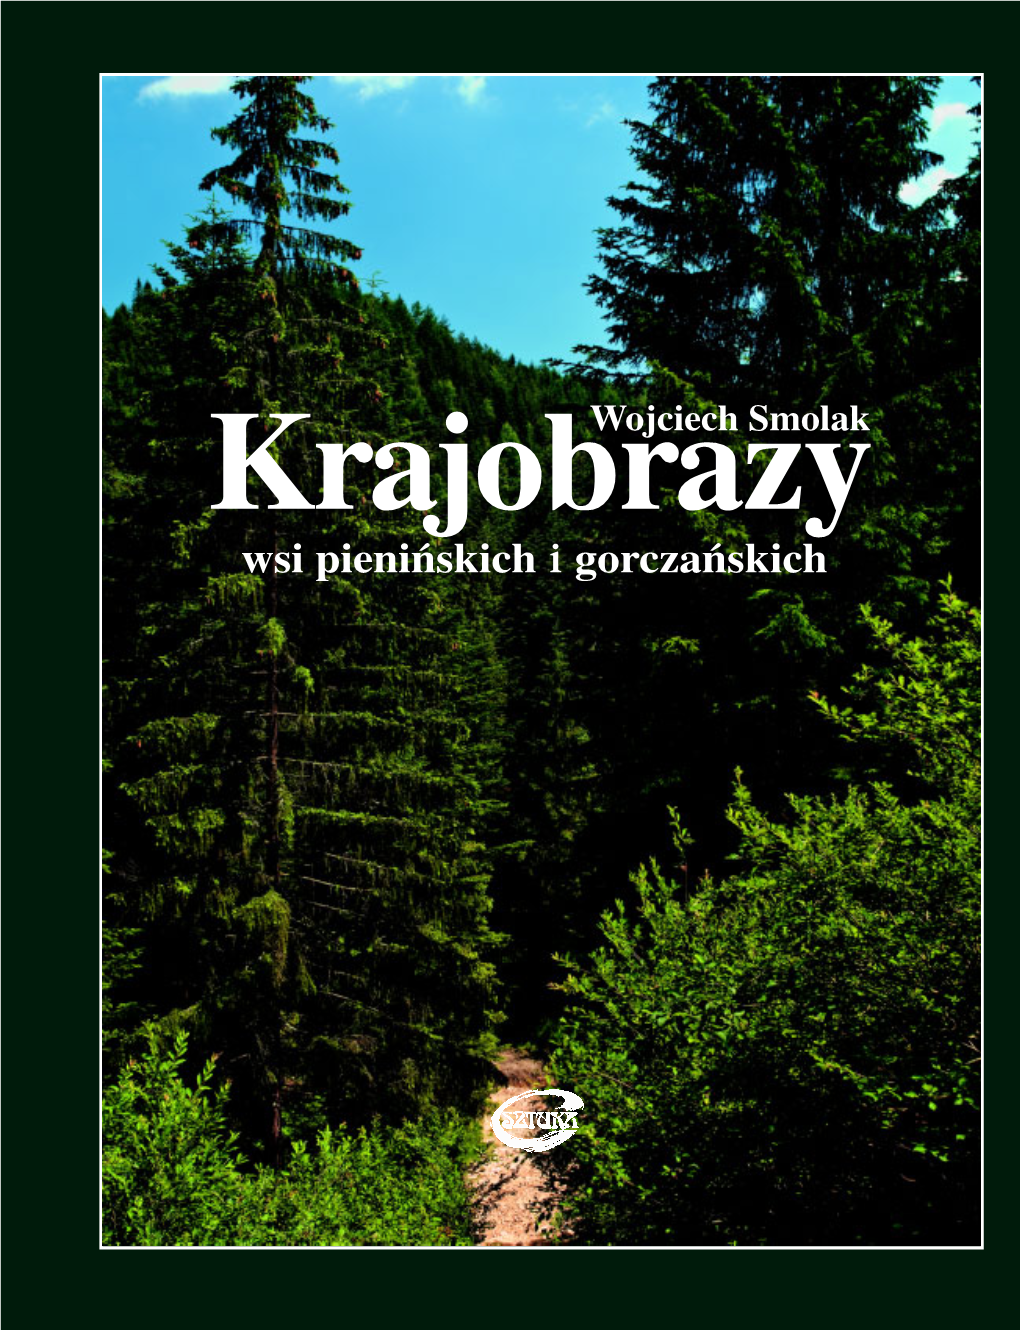 Album Krajobrazy.Pdf